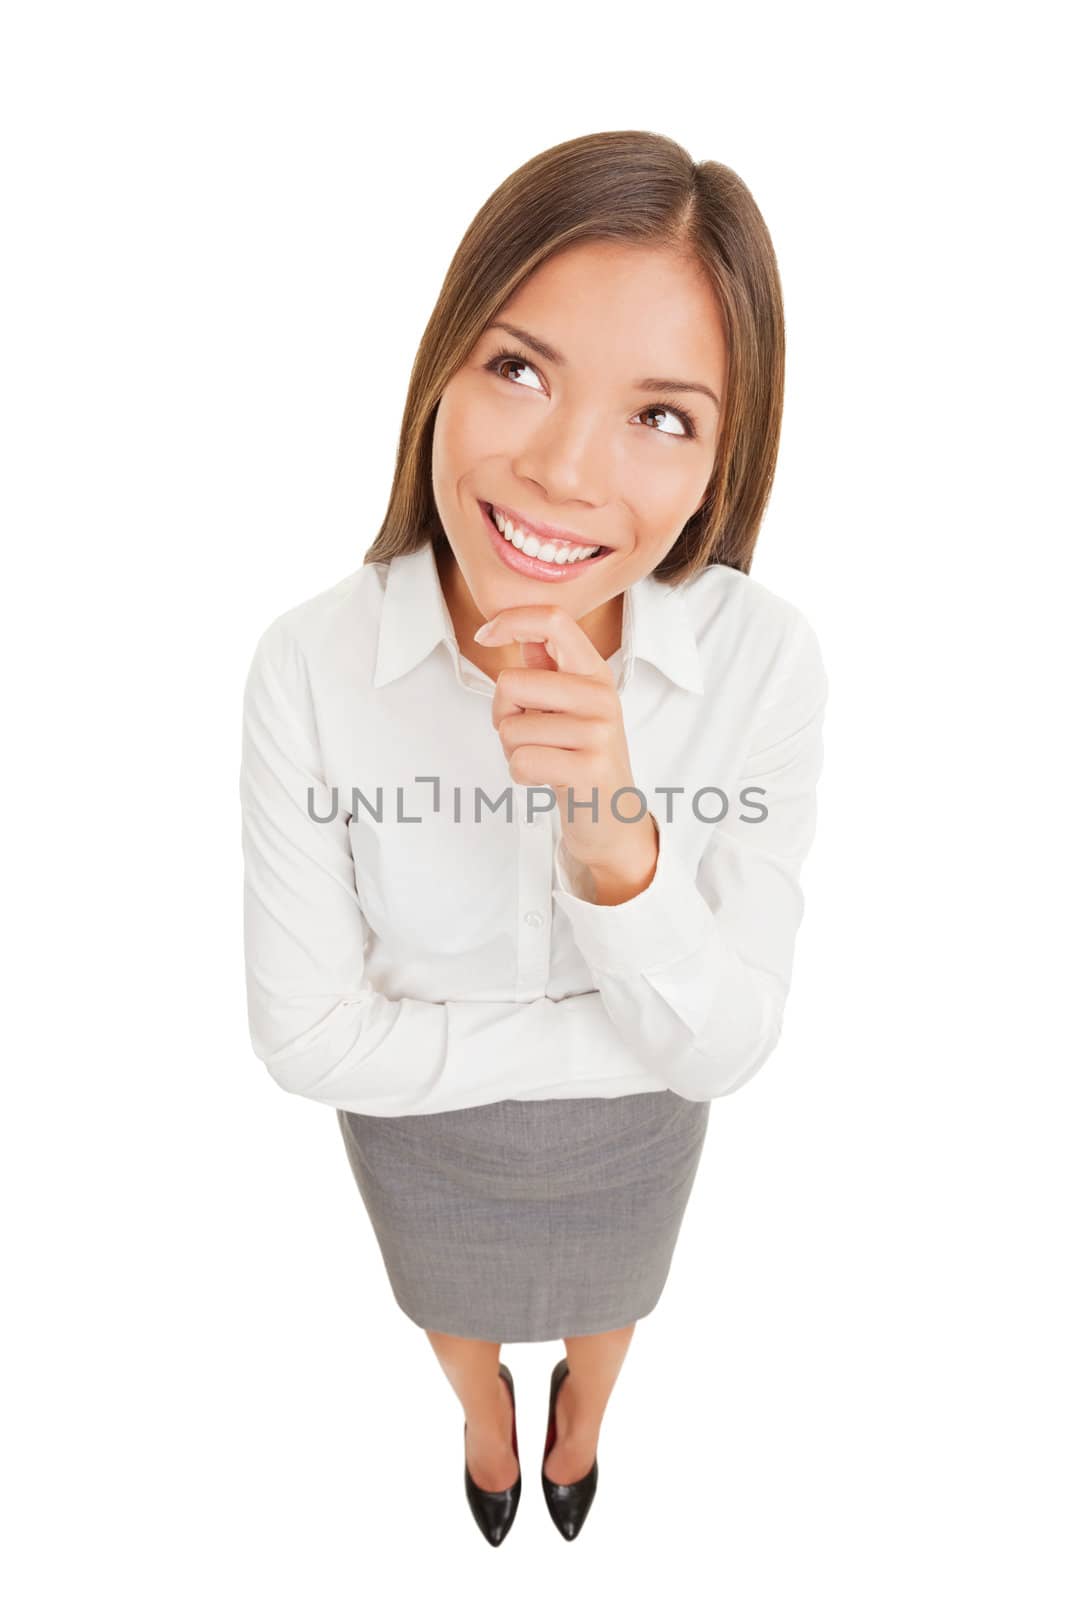 Thinking beautiful smiling business woman by Maridav